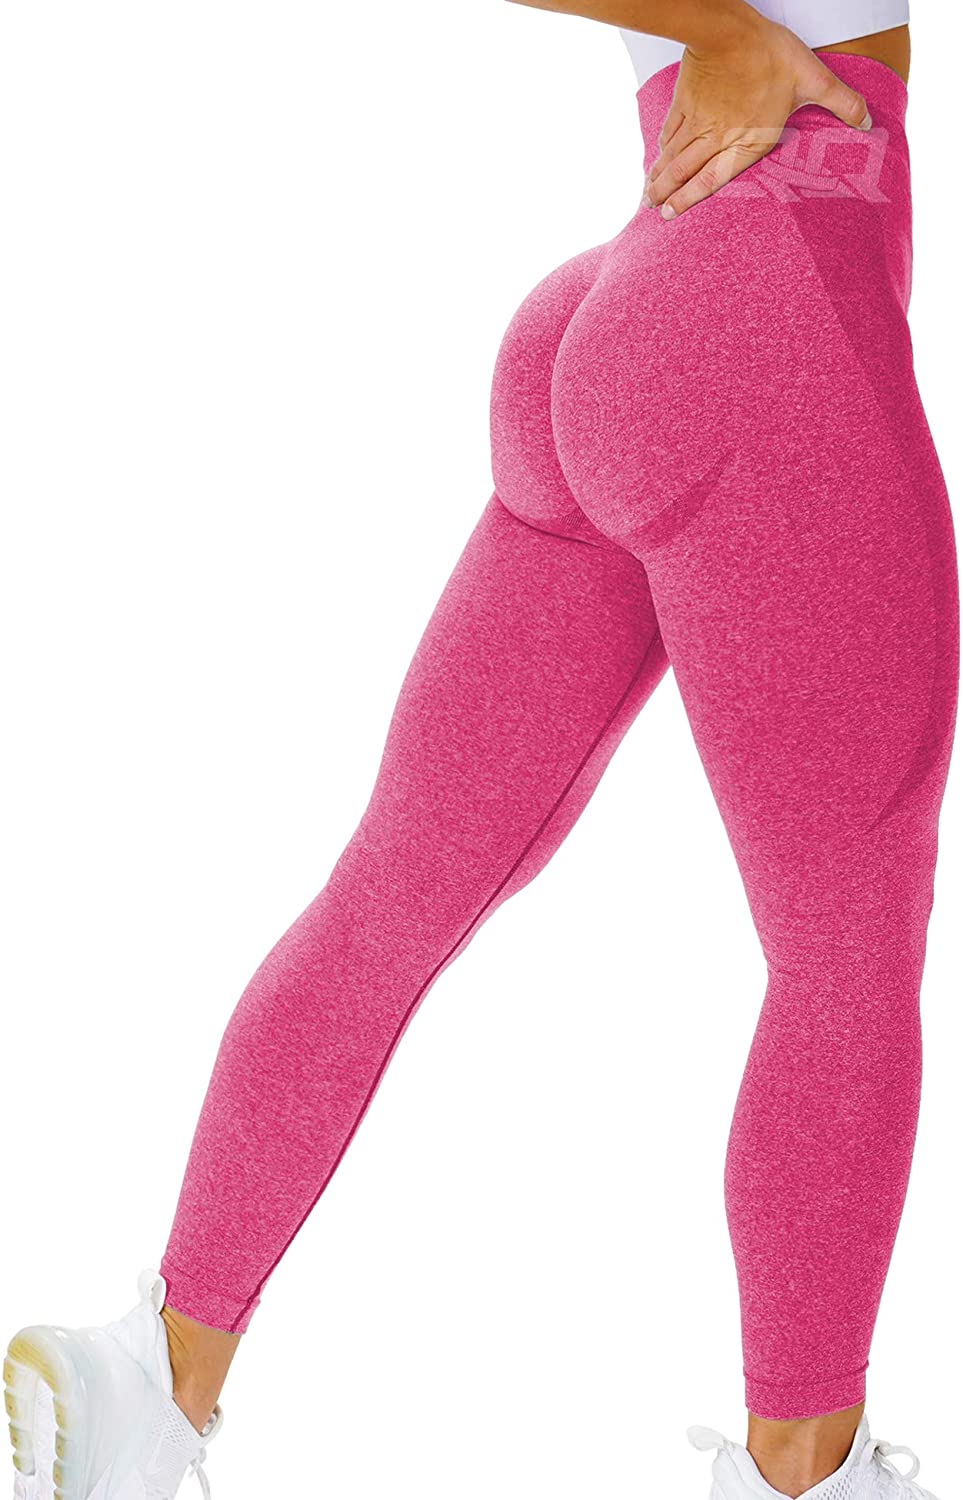 QOQ Women Seamless Scrunch Gym Workout Shorts High-Waisted Butt Lifting  Fitness Shorts #4 Solid Light Grey Large